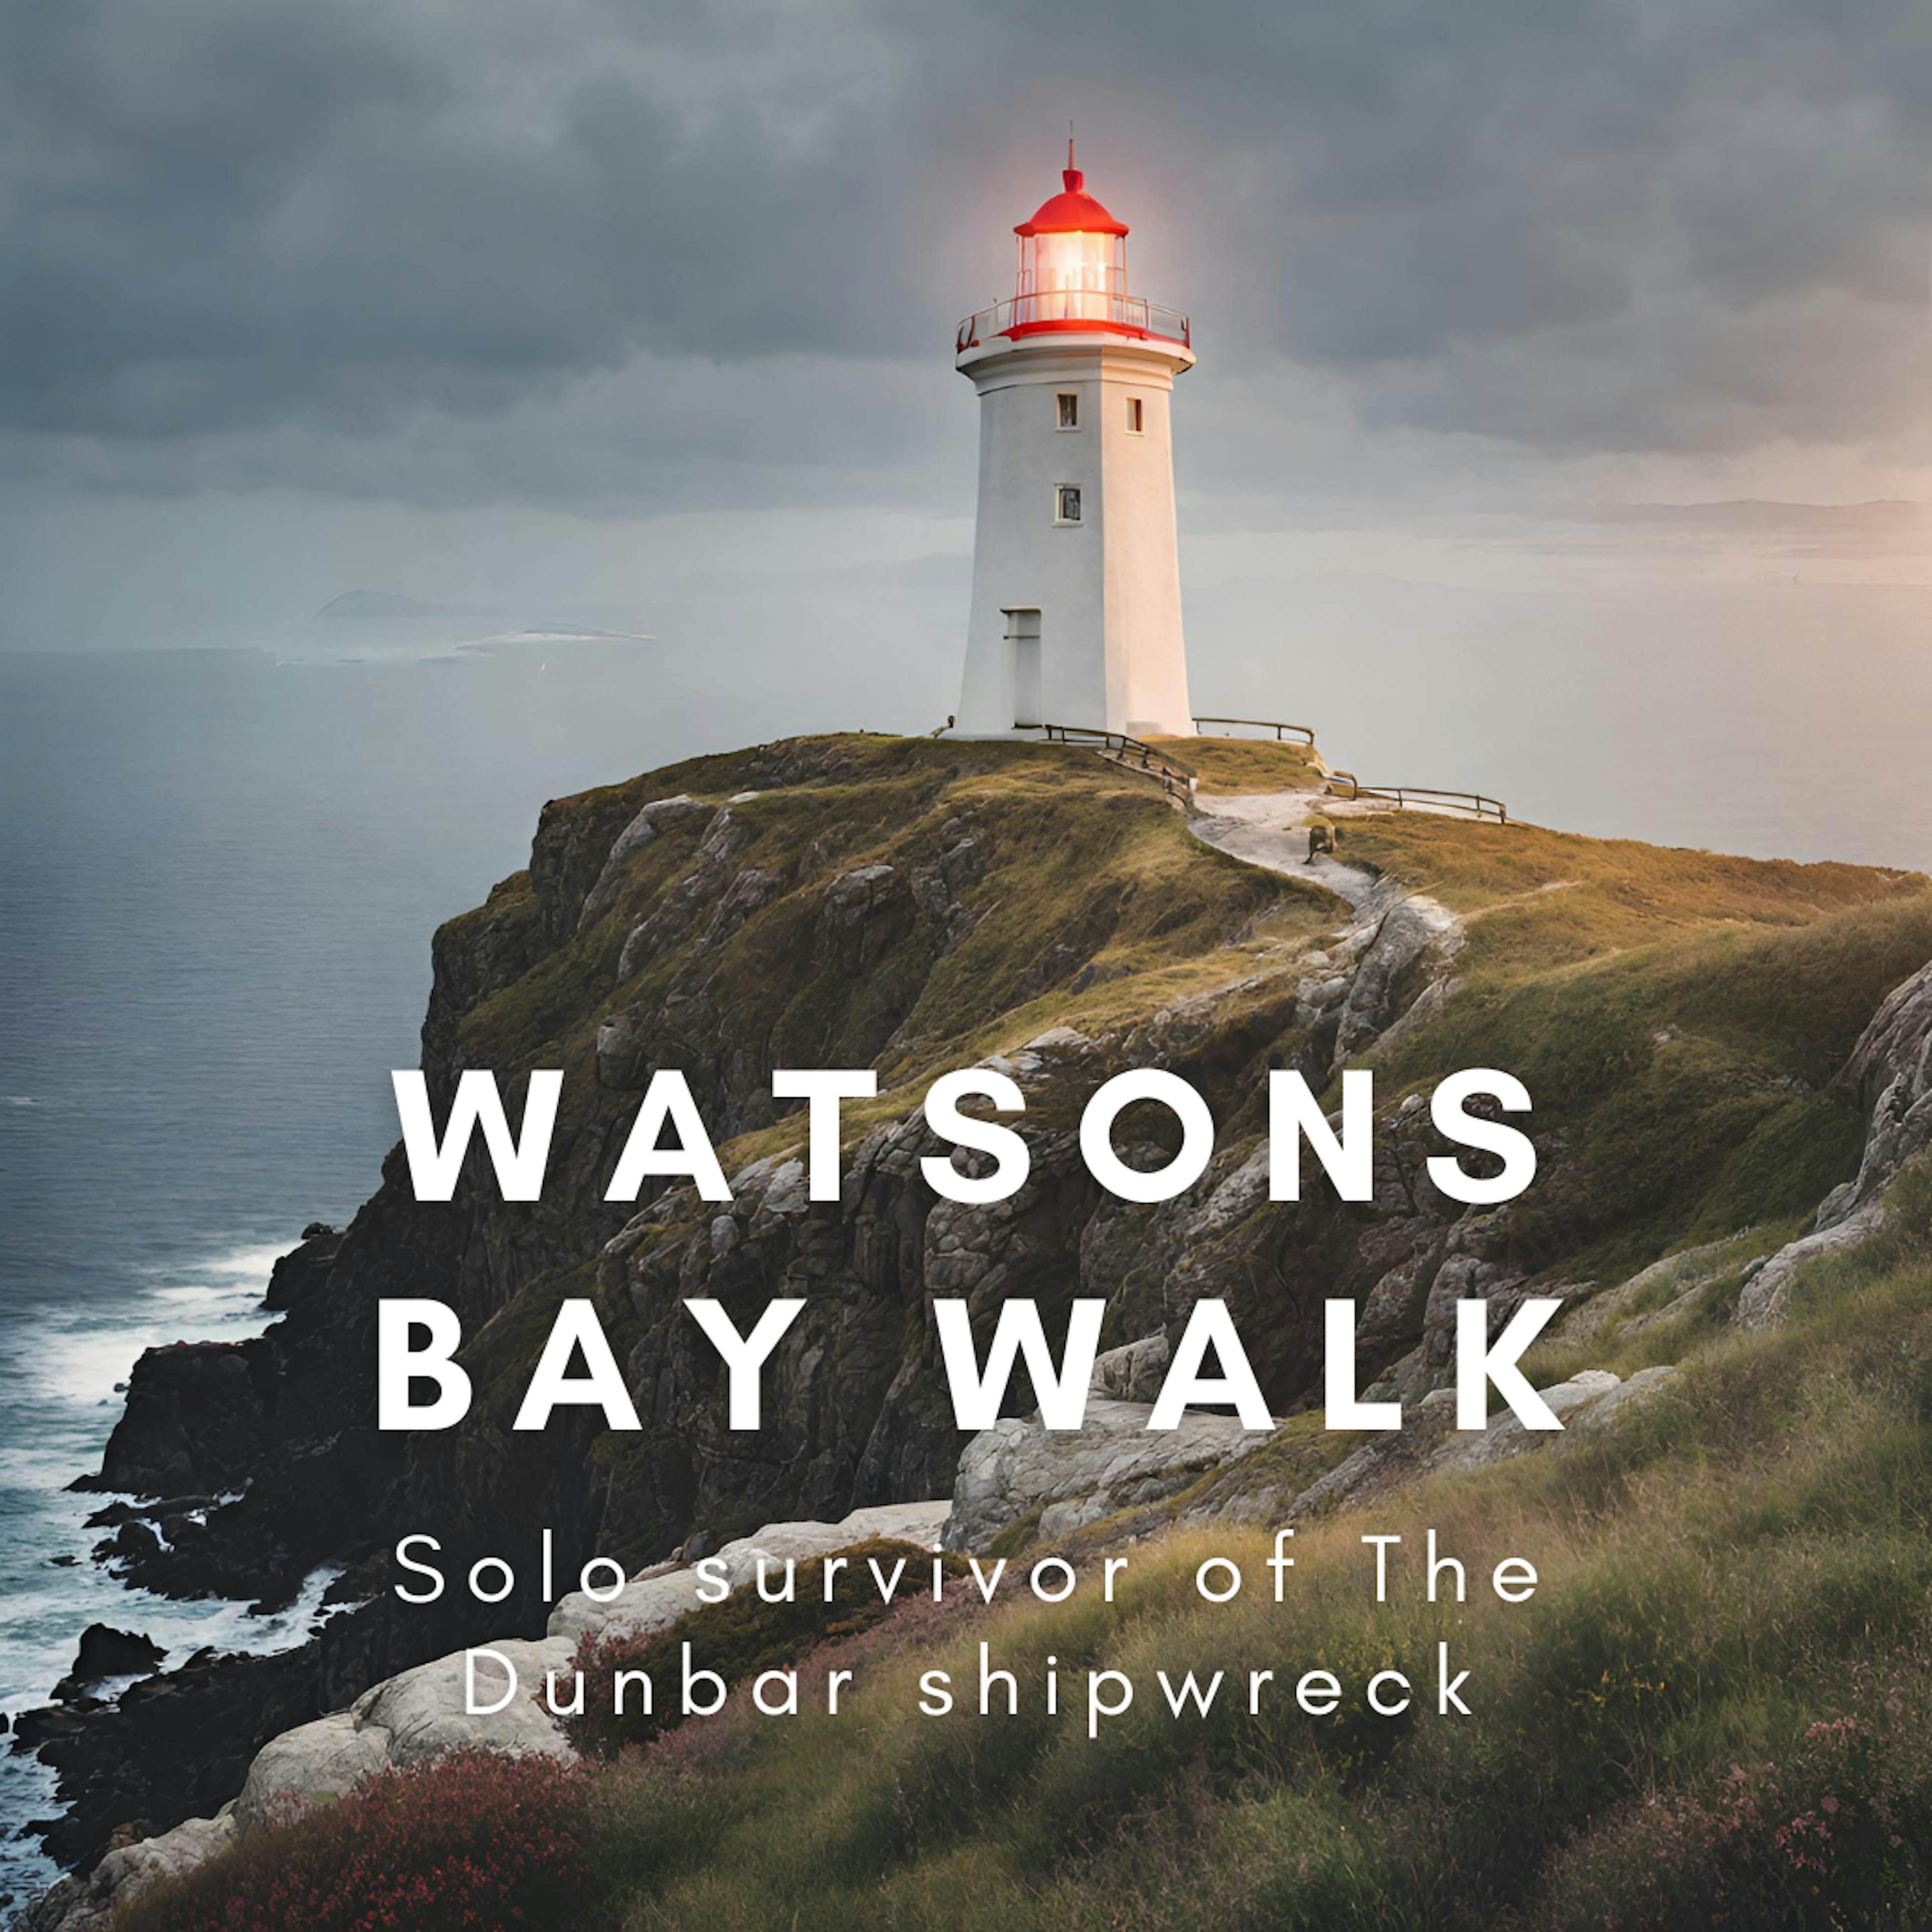 Watsons Bay Walk: Solo survivor of The Dunbar shipwreck image